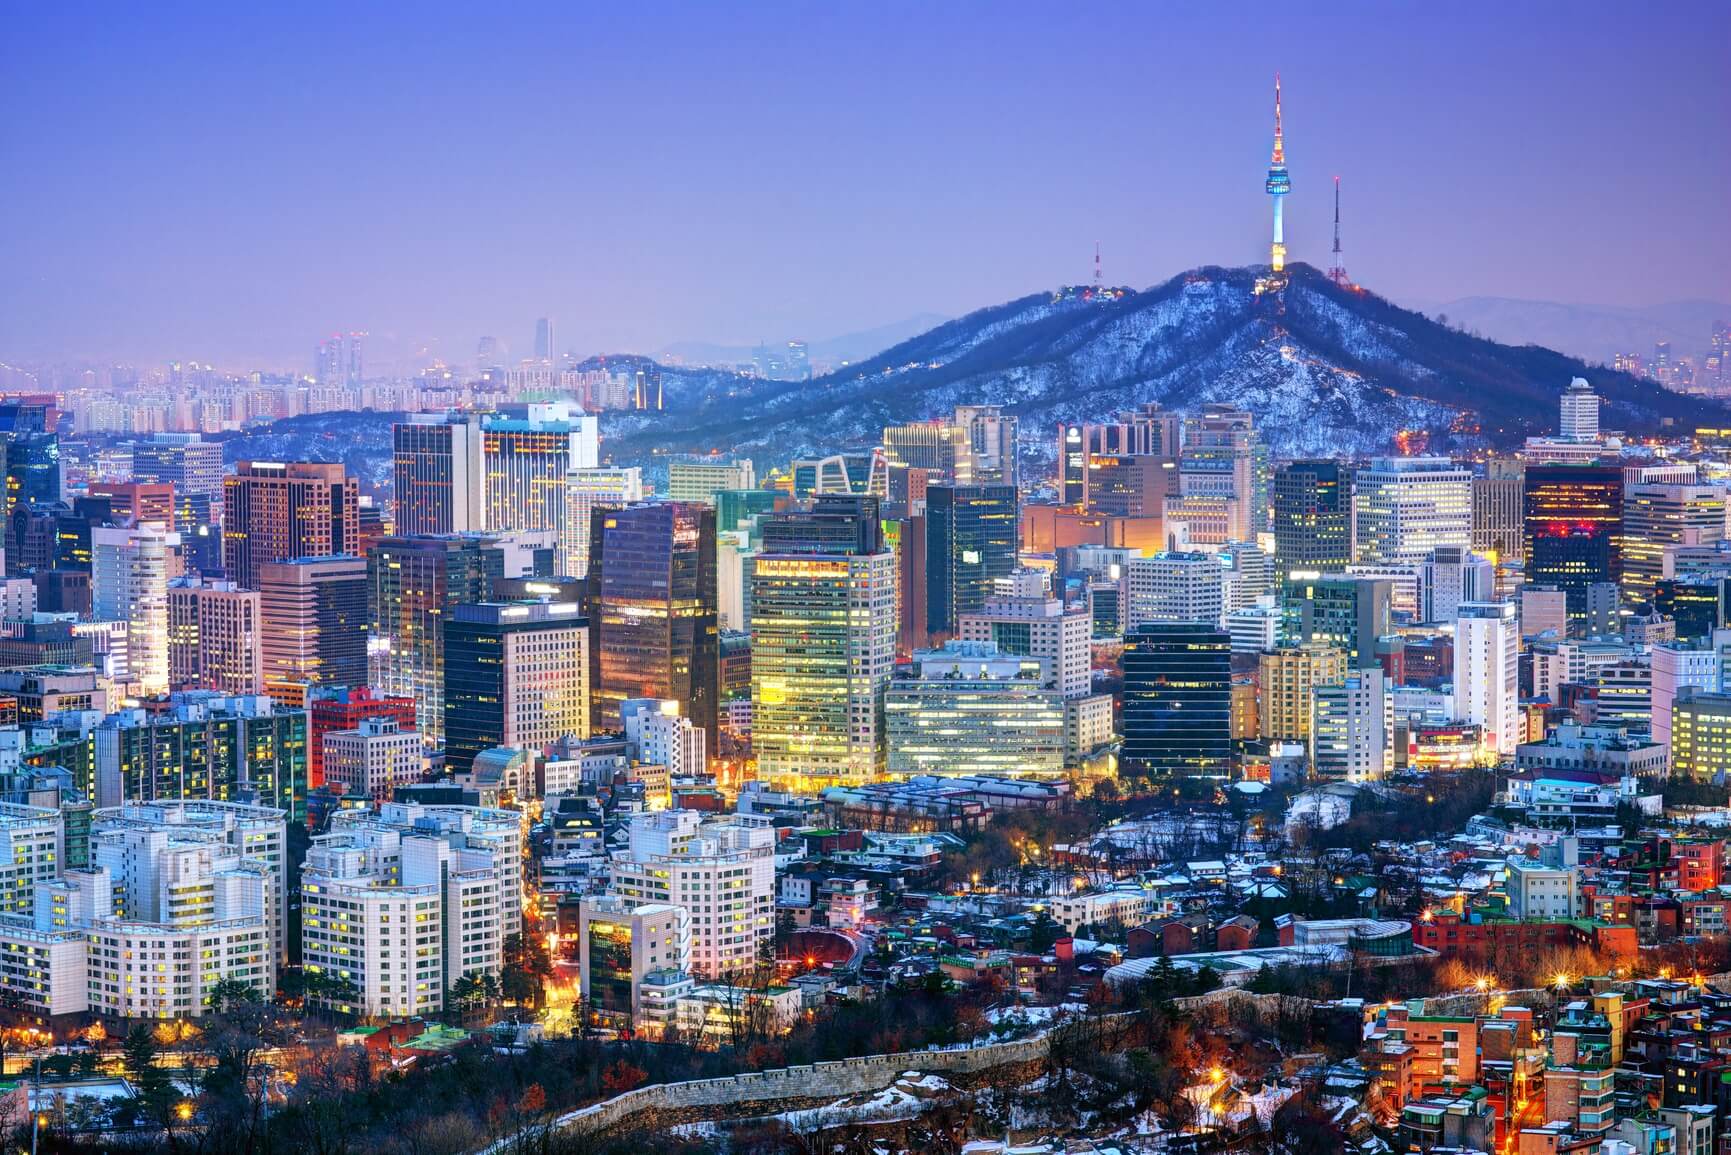 Flight deals from Budapest, Hungary to Seoul, South Korea | Secret Flying